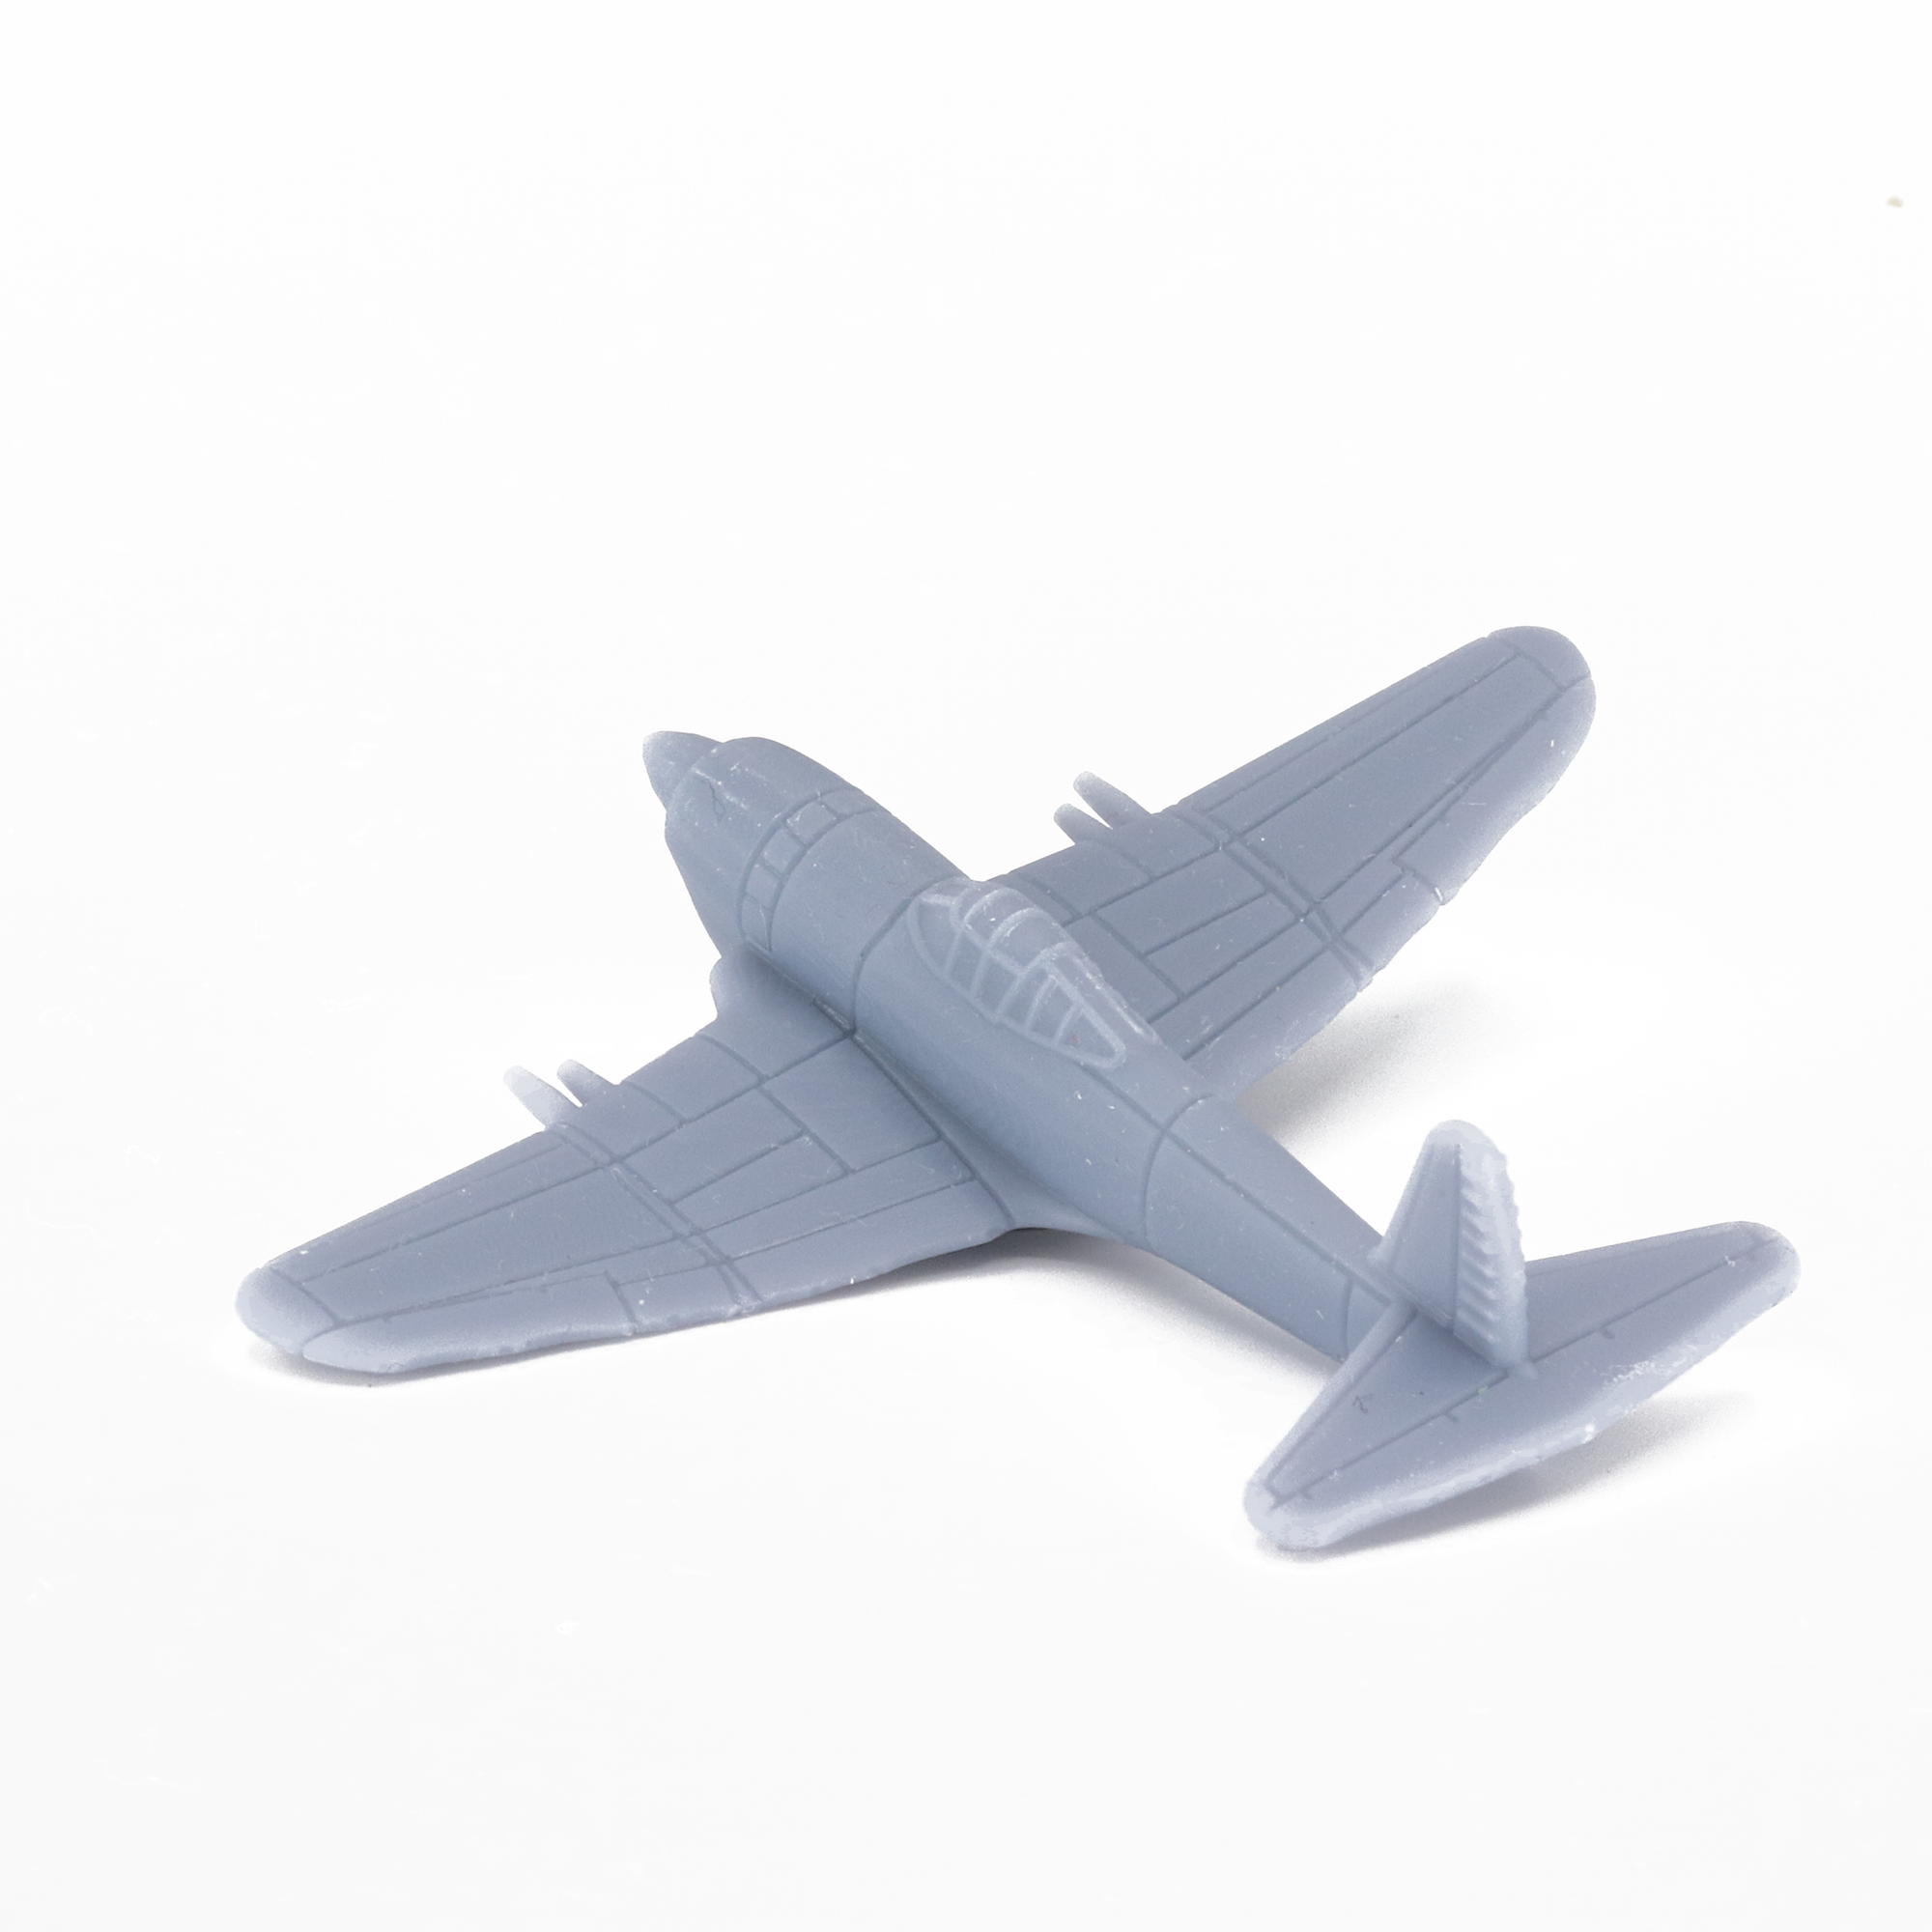 Grumman XF5F Skyrocket (Early)